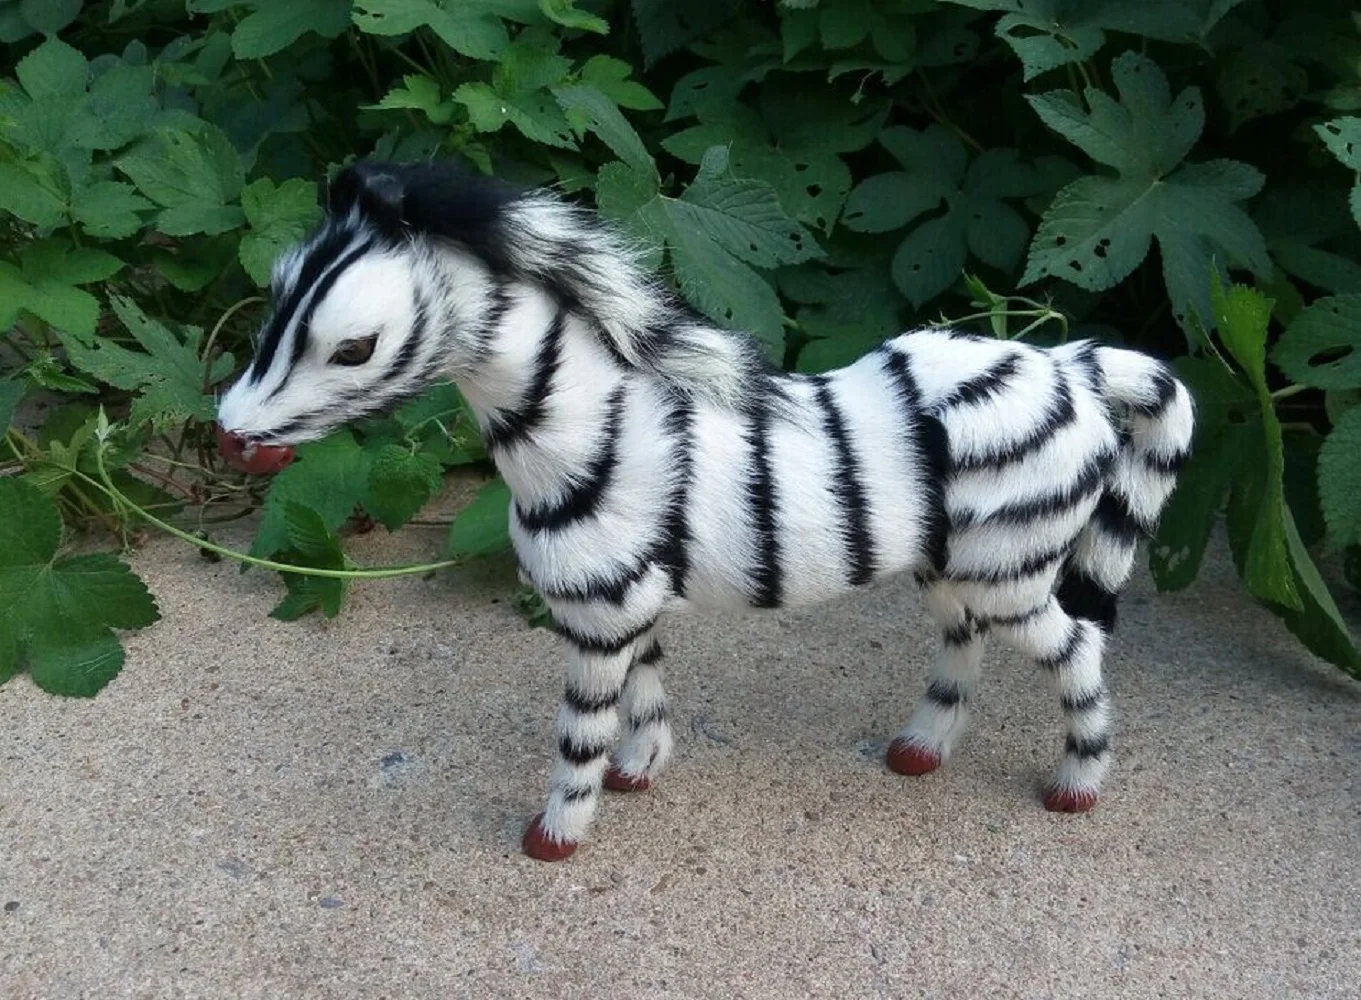 middle-simulation-balck-white-zebra-toy-lifelike-zebra-doll-gift-about-30x24cm